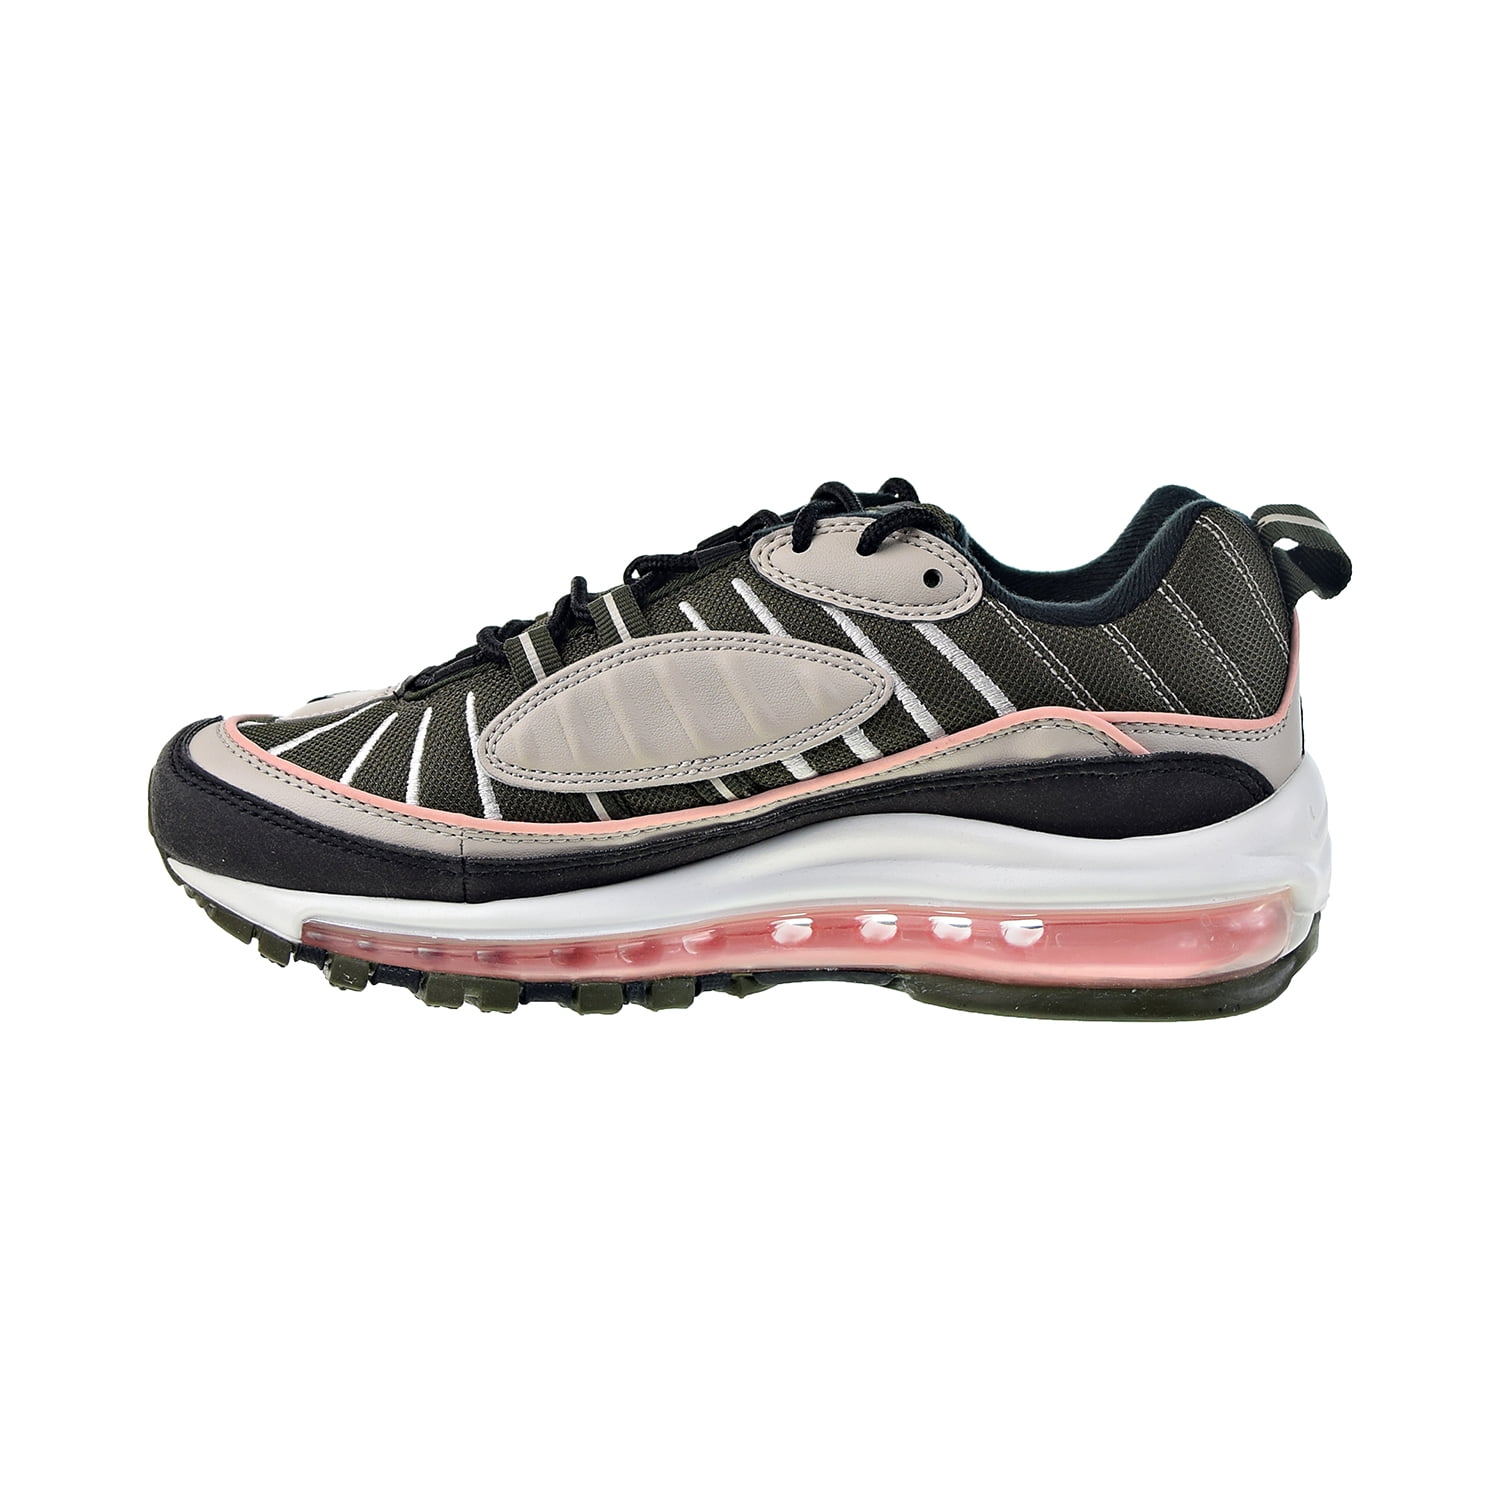 Air Max 98 Women's Shoes Cargo Khaki-Black-Desert Sand ah6799-301 - Walmart.com